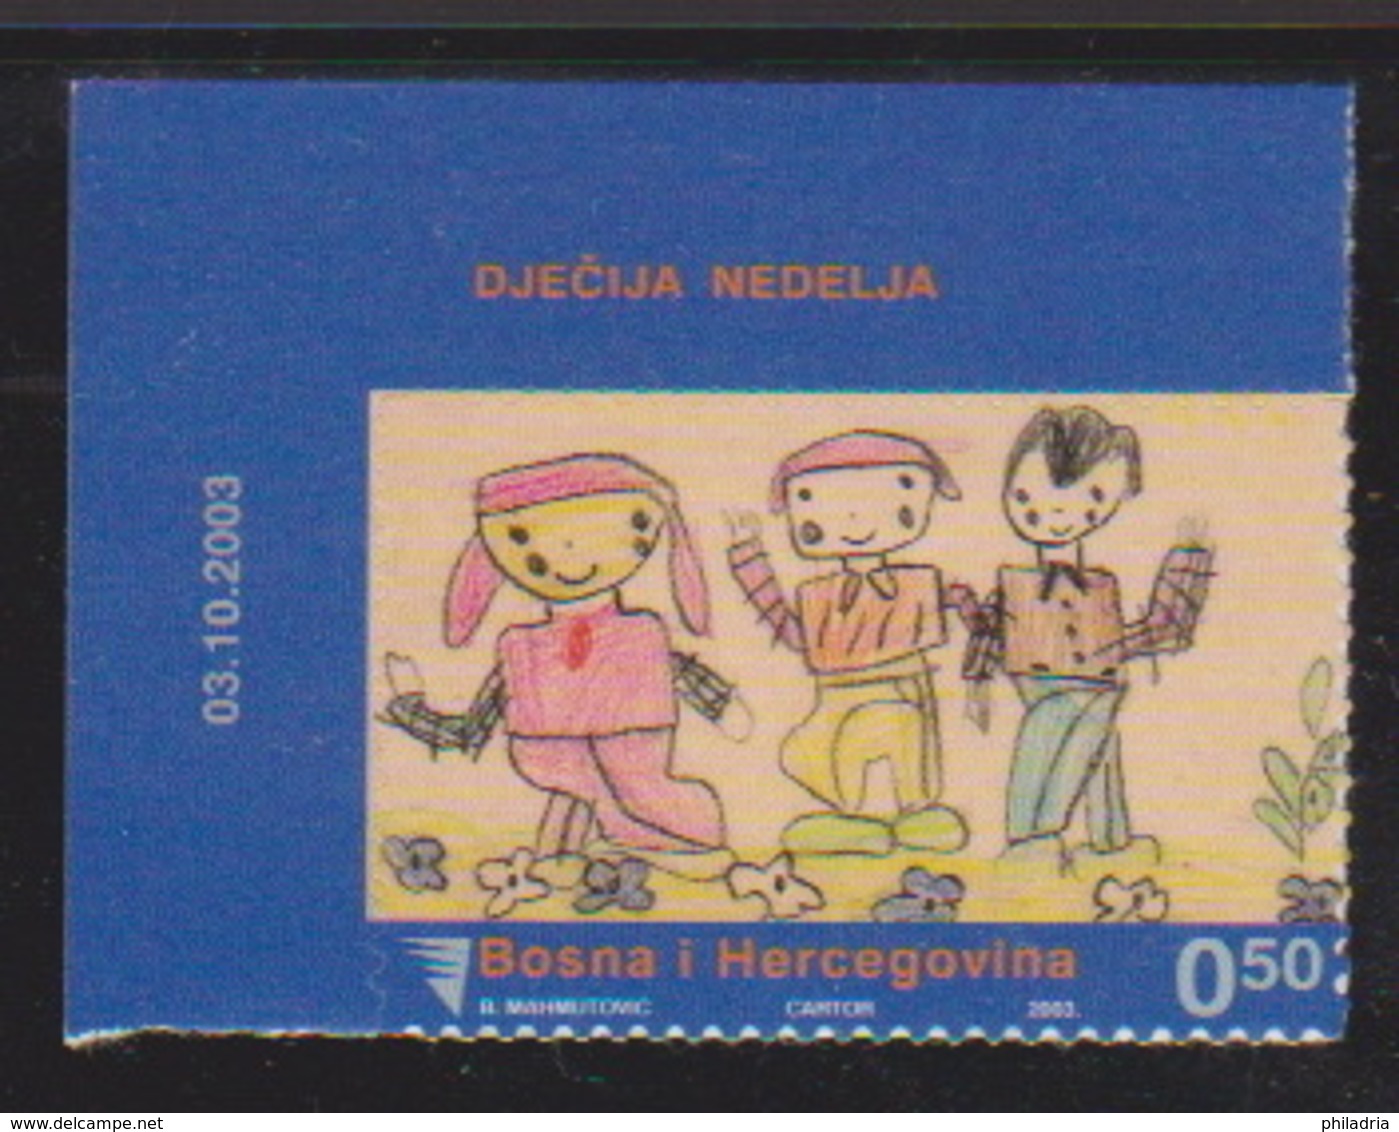 Bosnia, Children Week 2003, Self Adhesive Stamp, MNH - Bosnia And Herzegovina